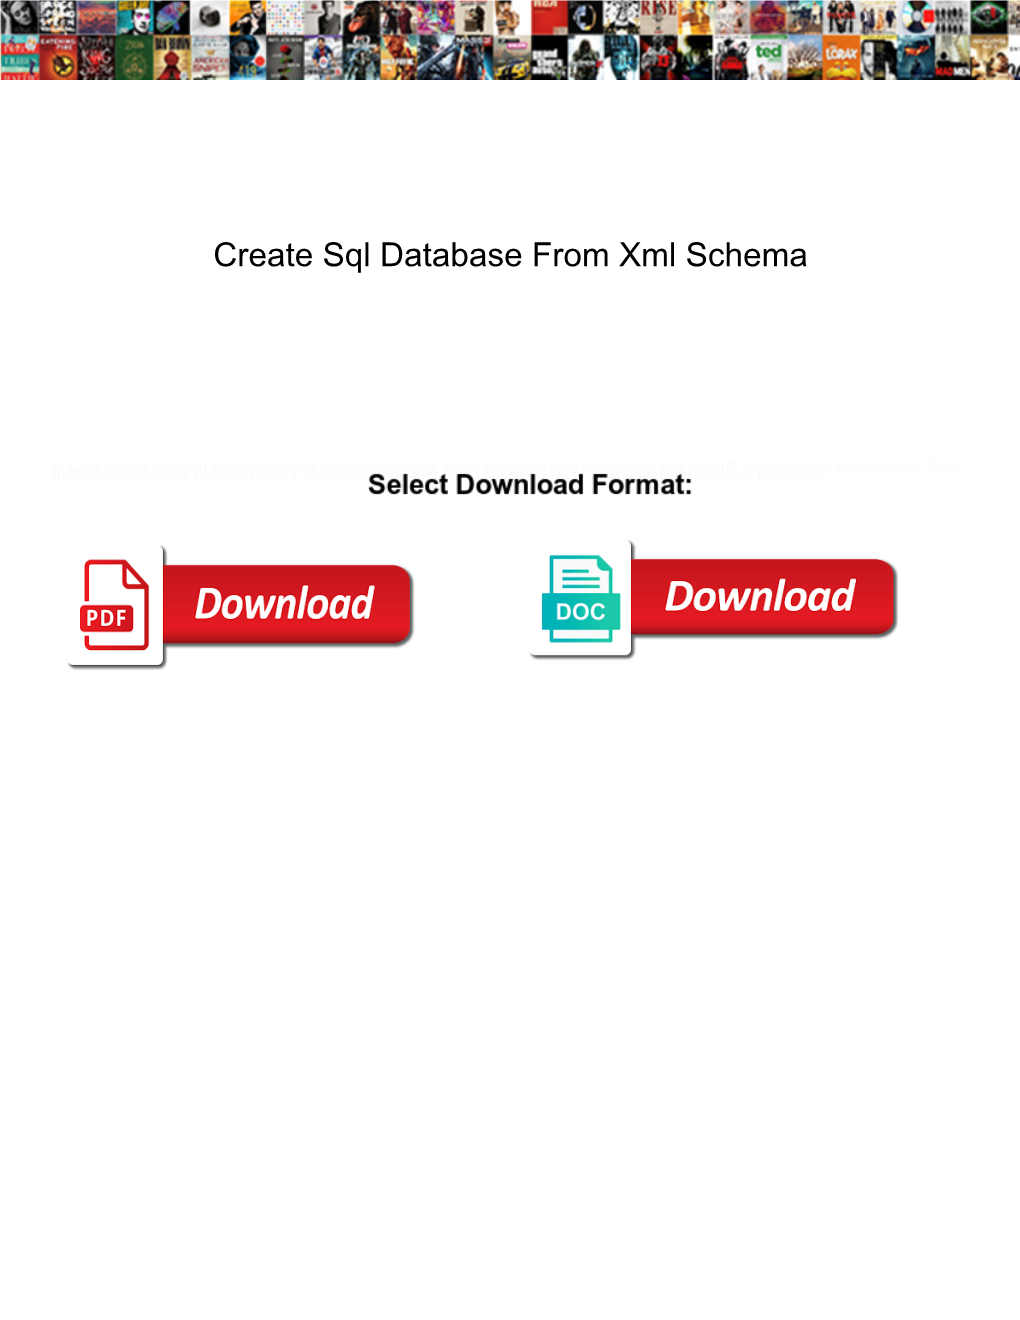 Create Sql Database from Xml Schema